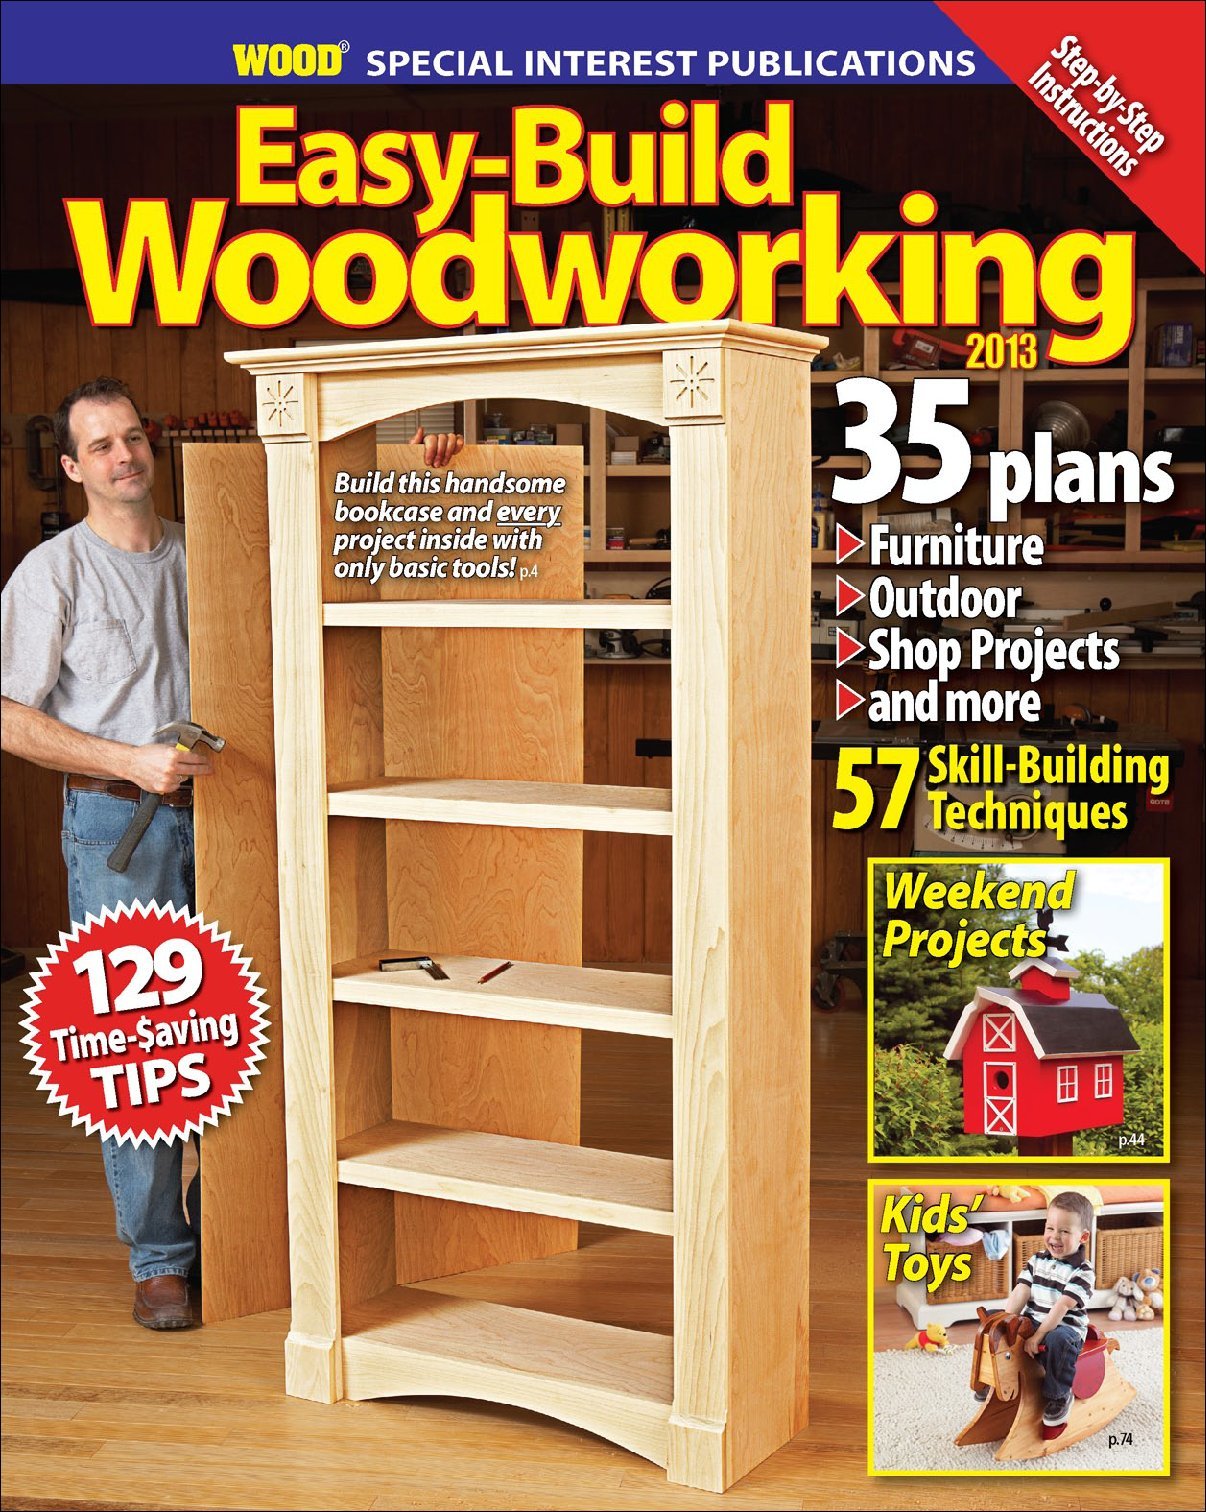 Woodworking supply magazine Main Image